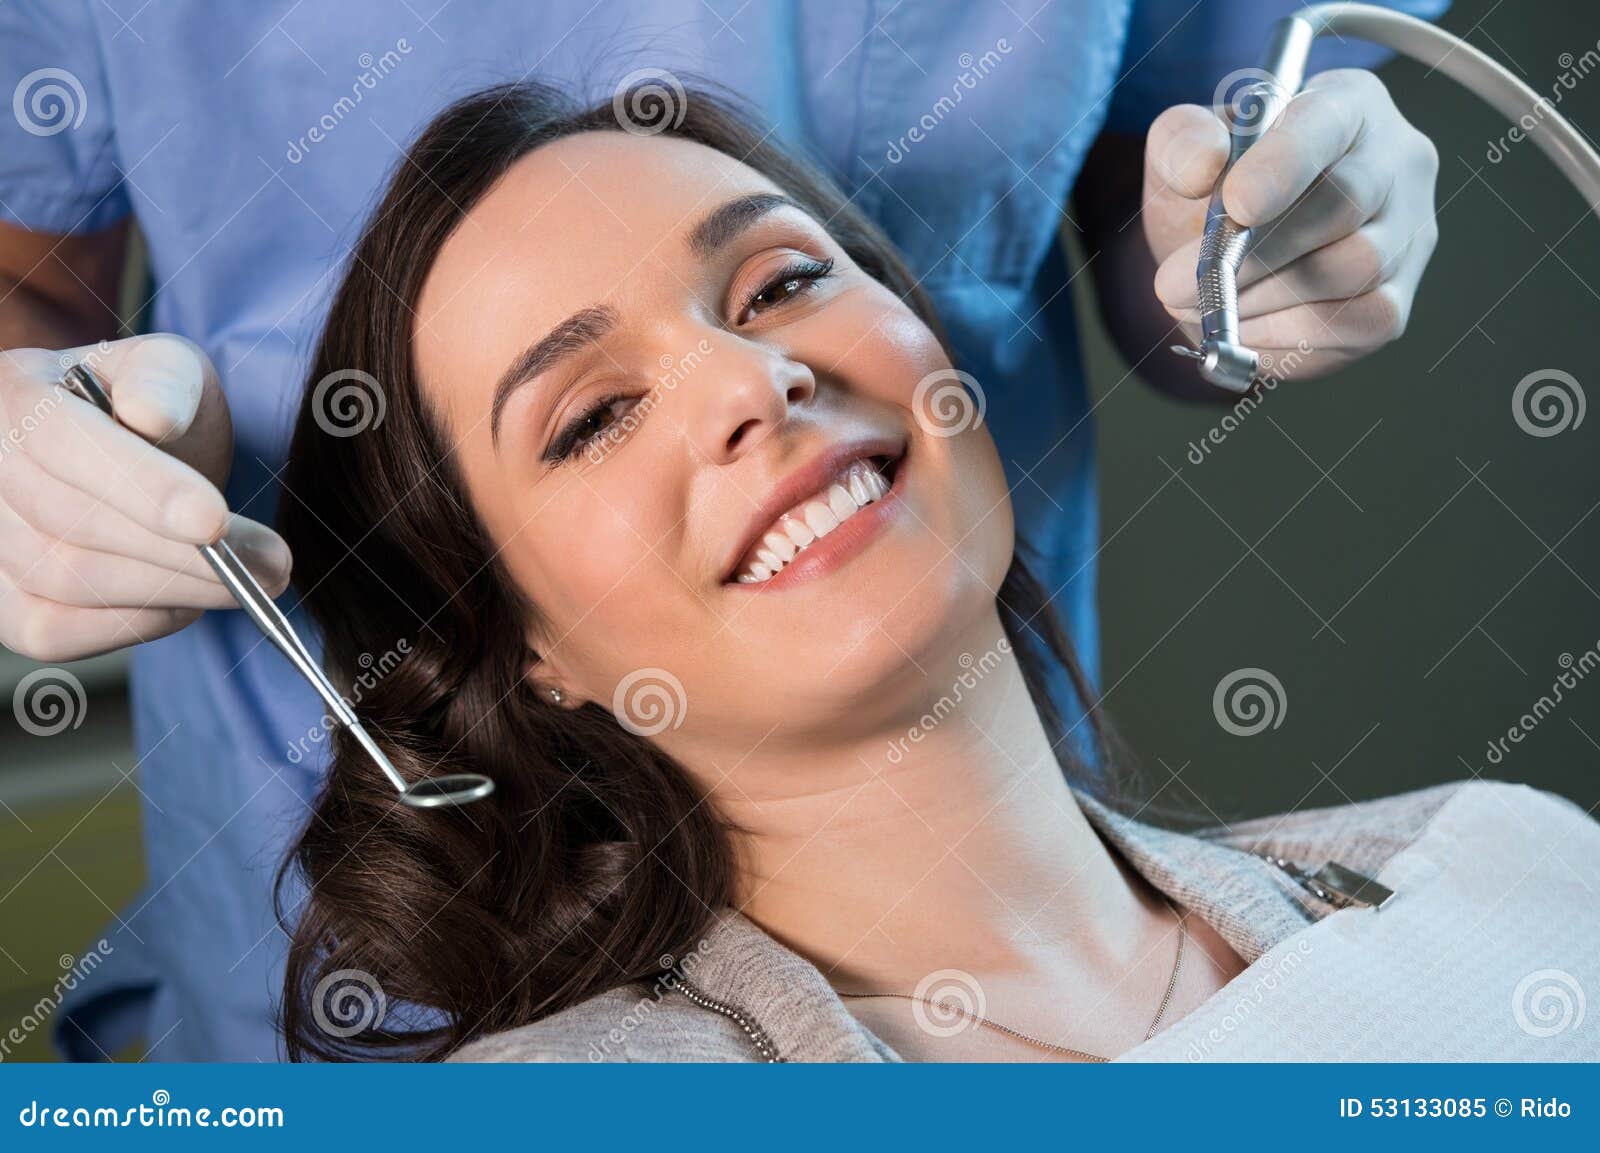 dental checkup